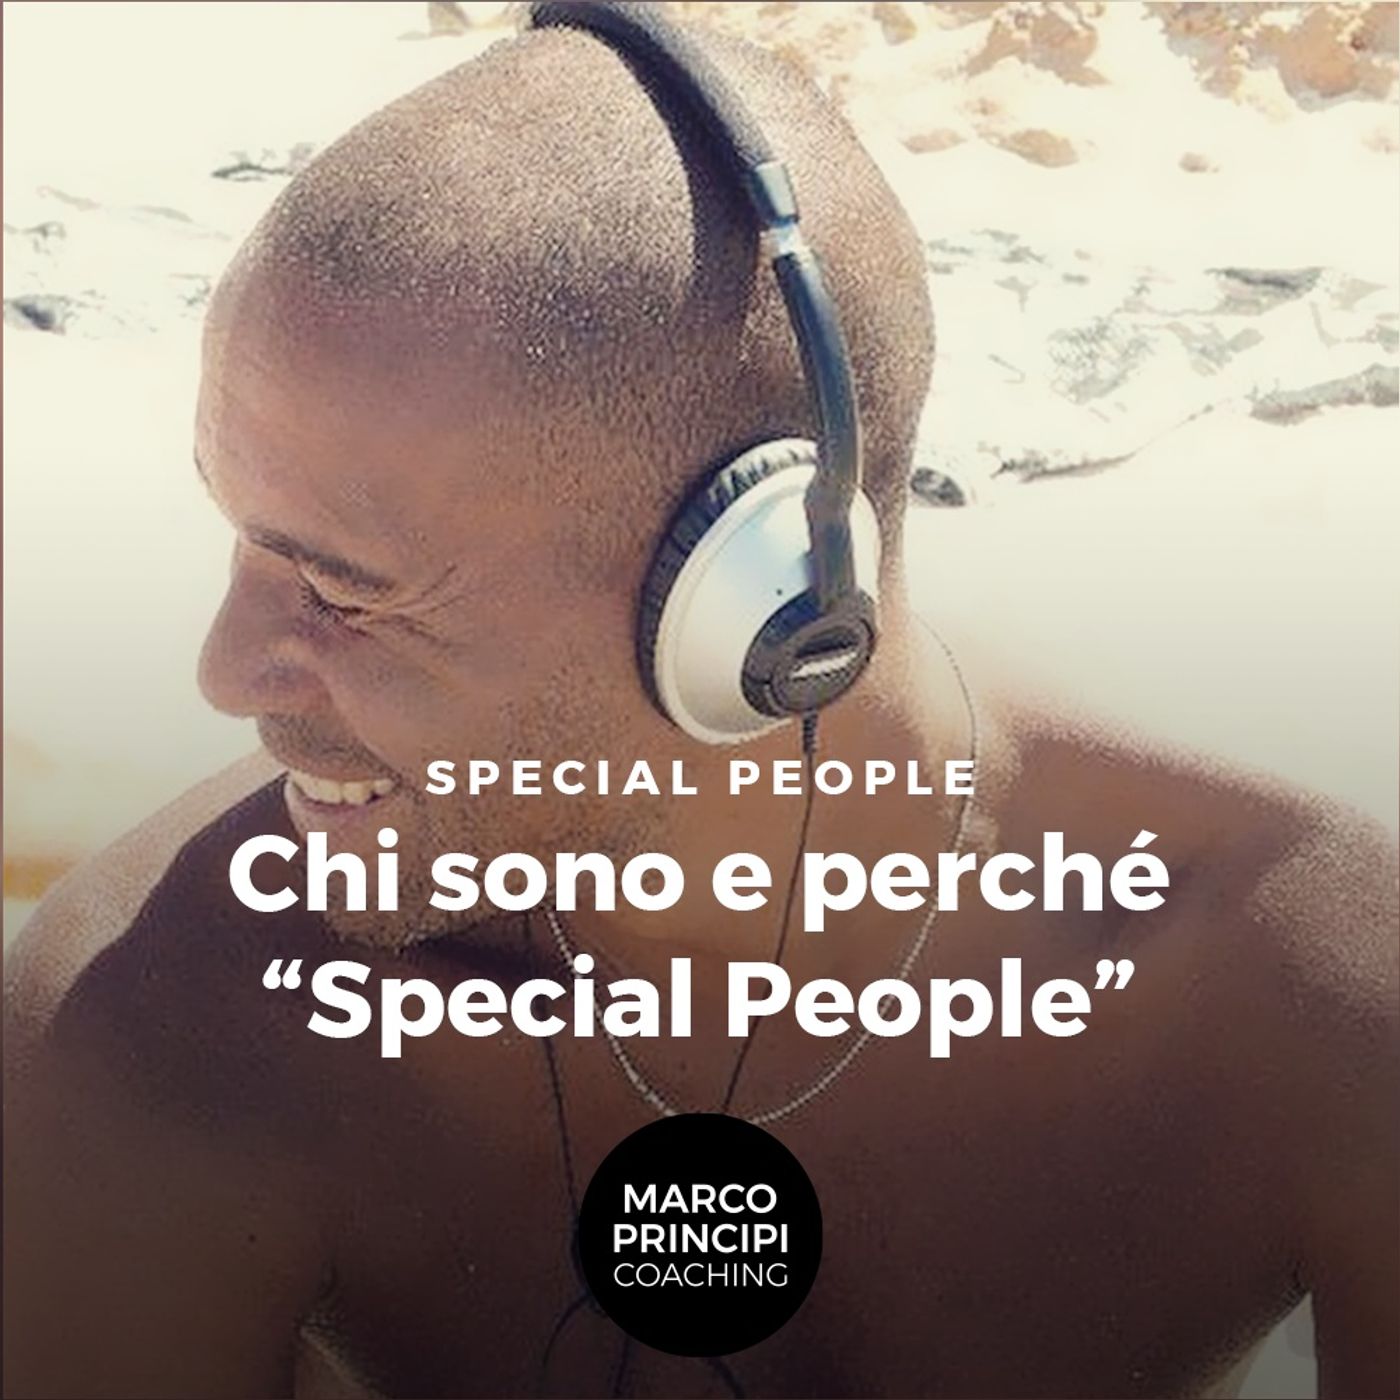 Special People Podcast "Chi sono e perchè Special People"